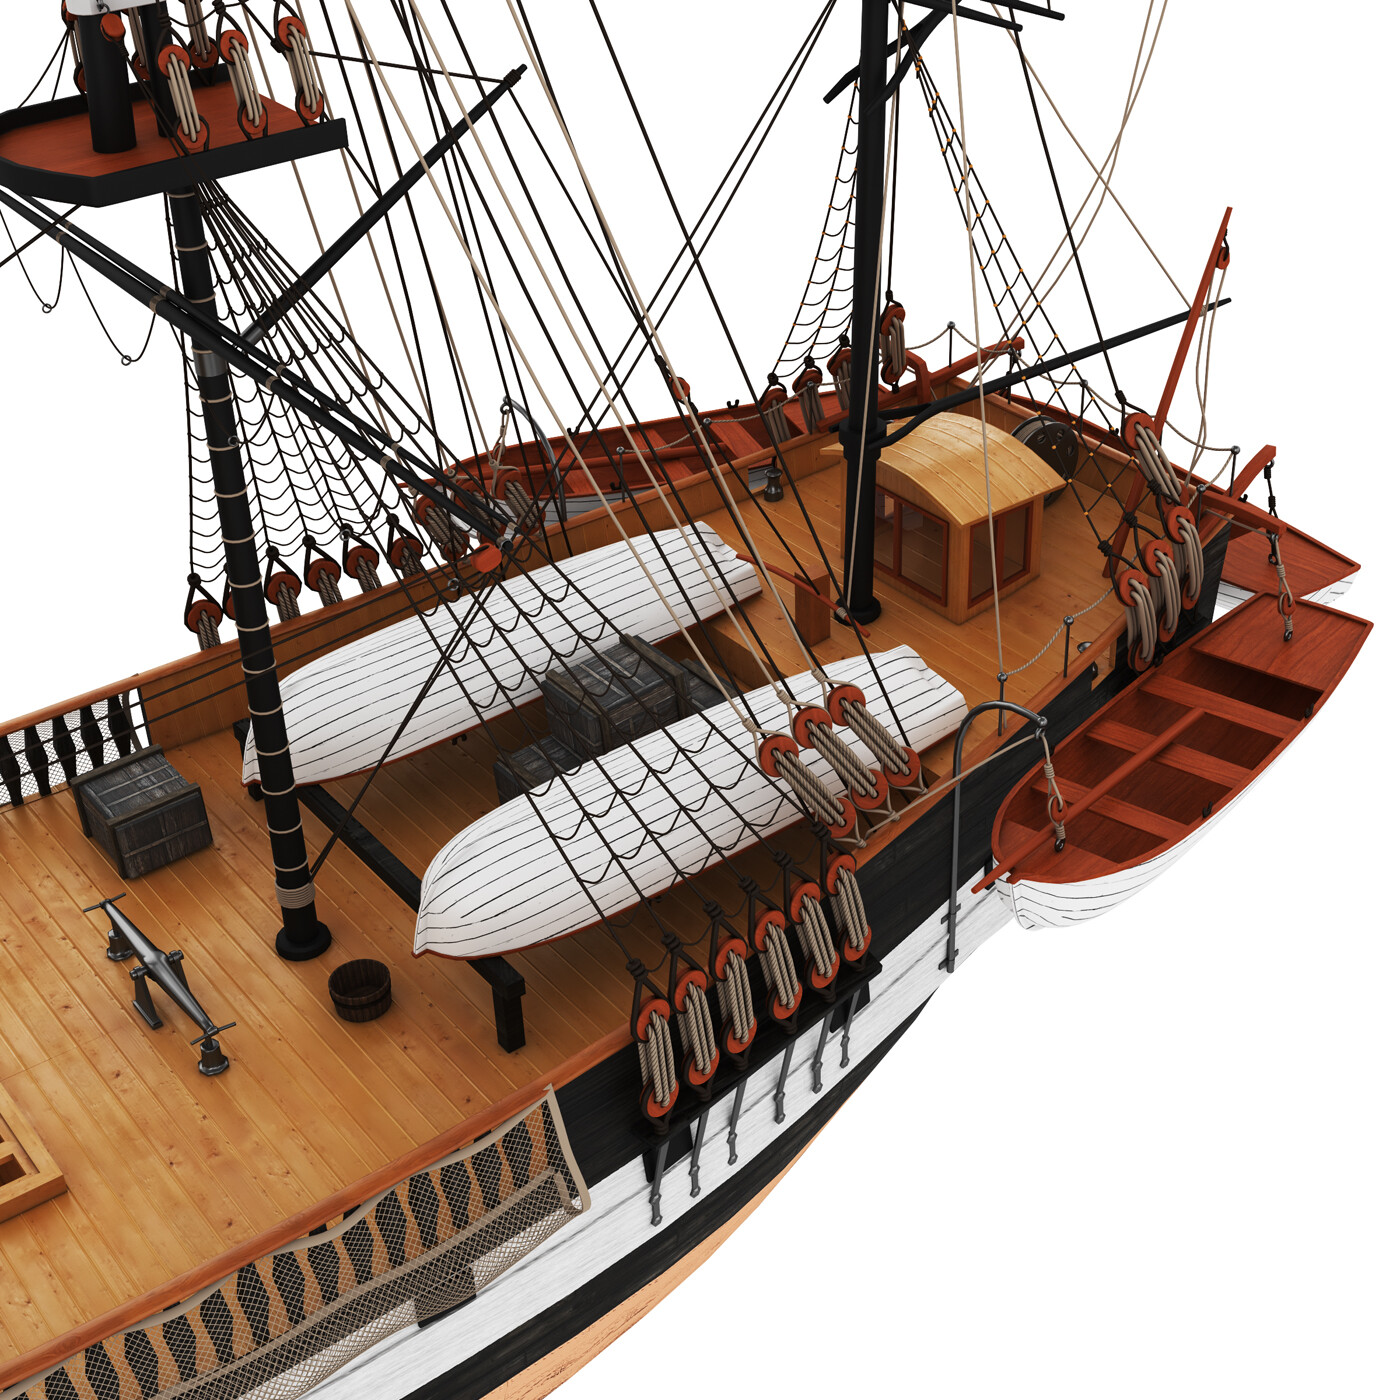 General 1400x1400 ship model model ship CGI sailing ship